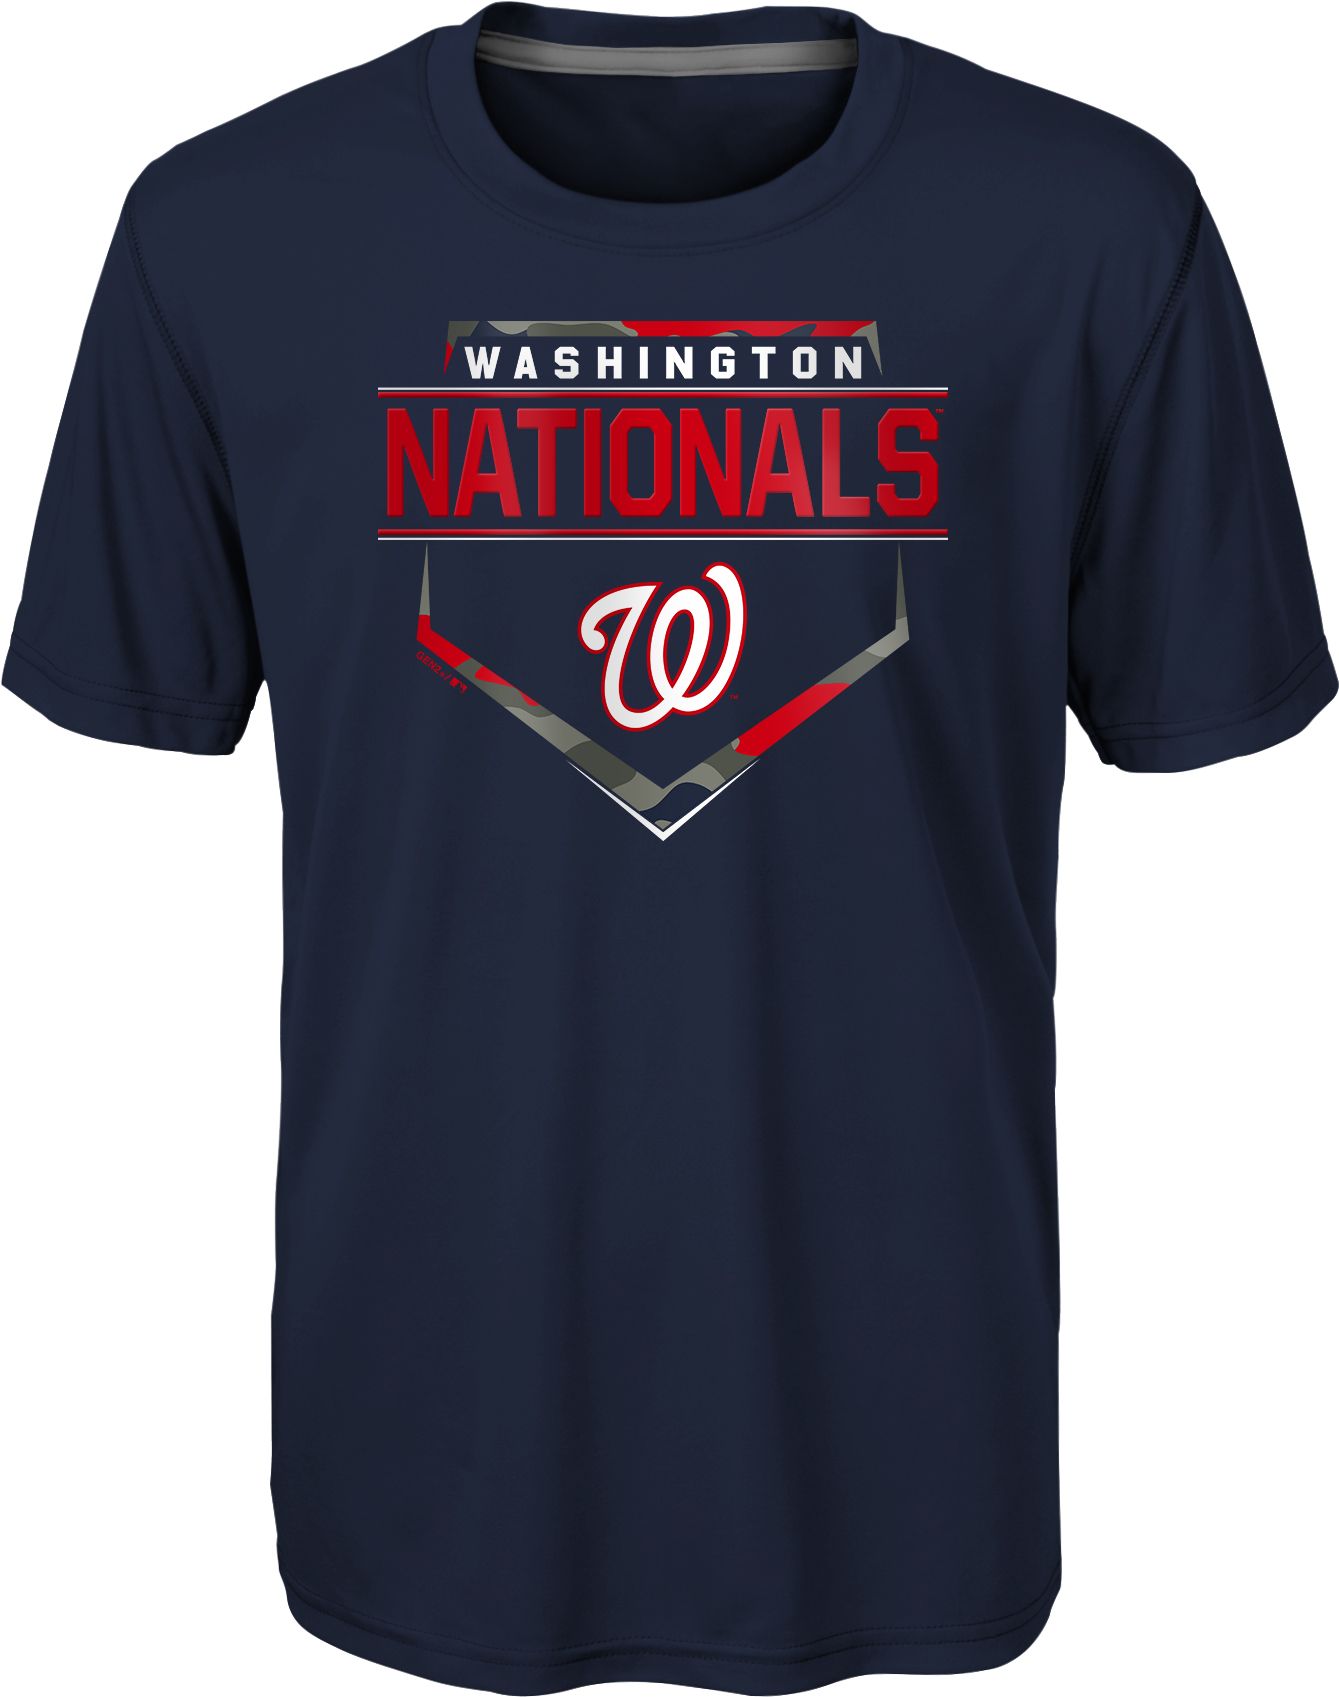 washington nationals kids shirt